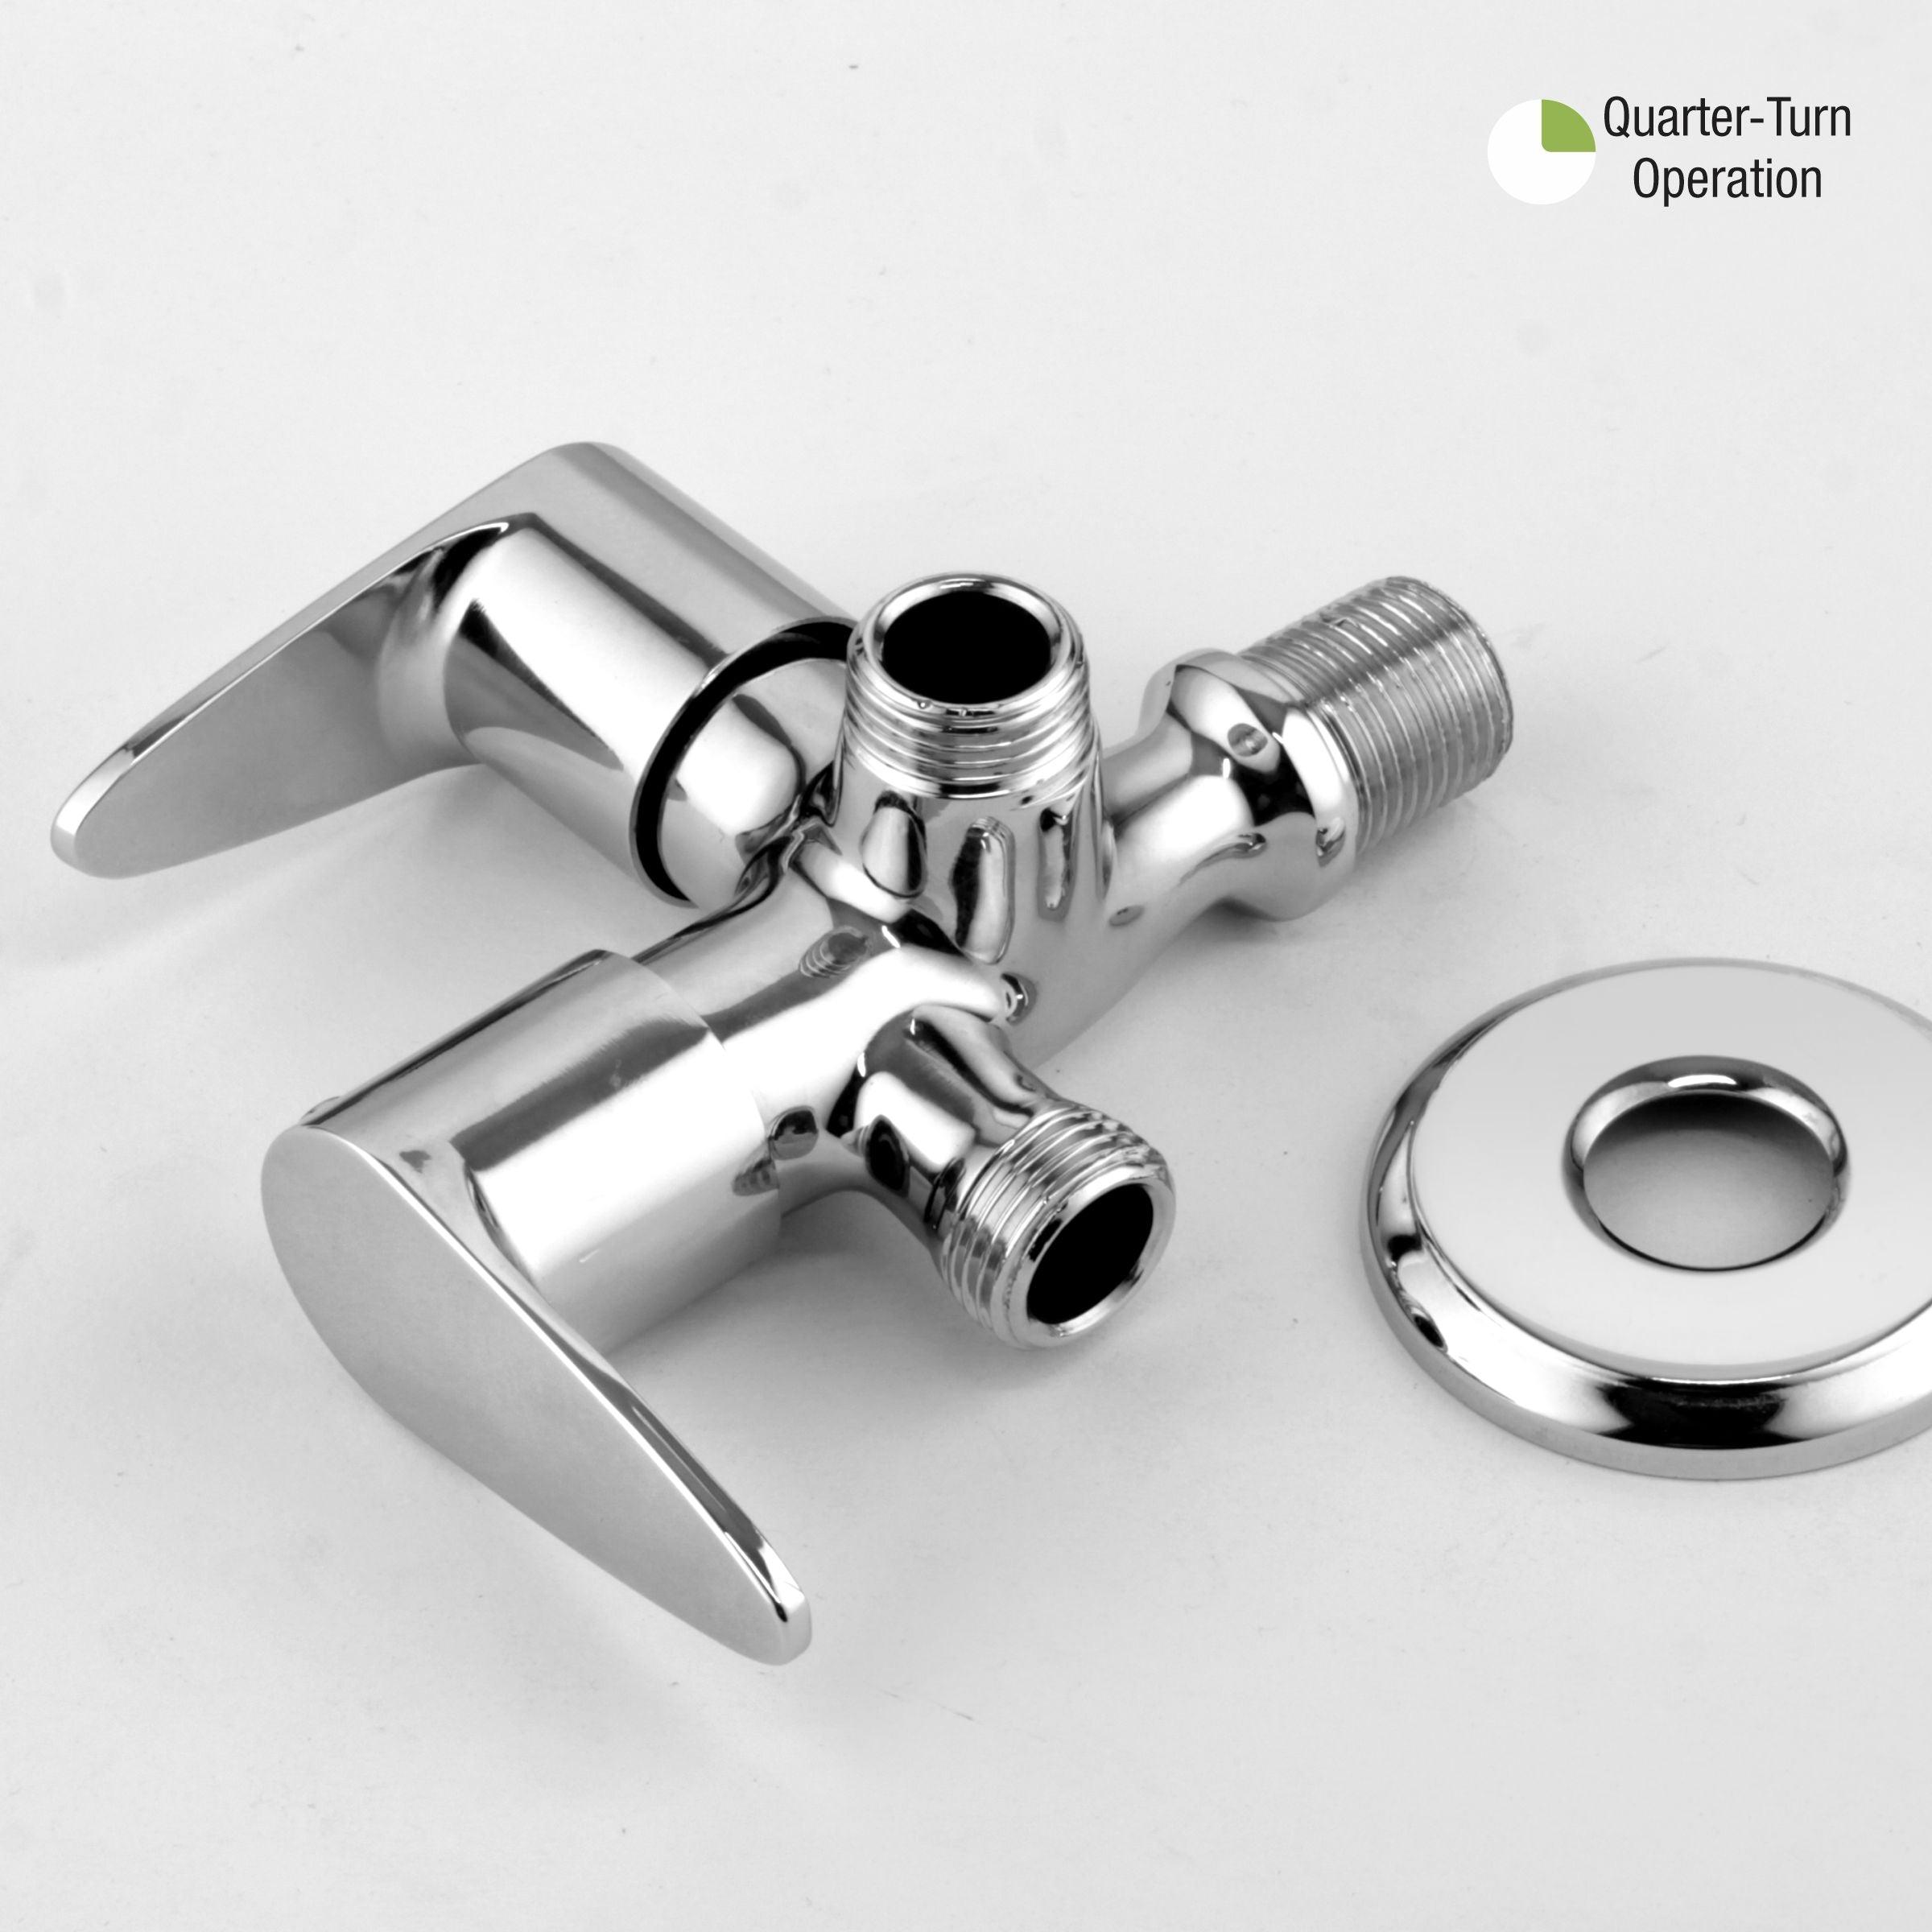 Lava Two Way Angle Valve Brass Faucet (Double Handle) - LIPKA - Lipka Home